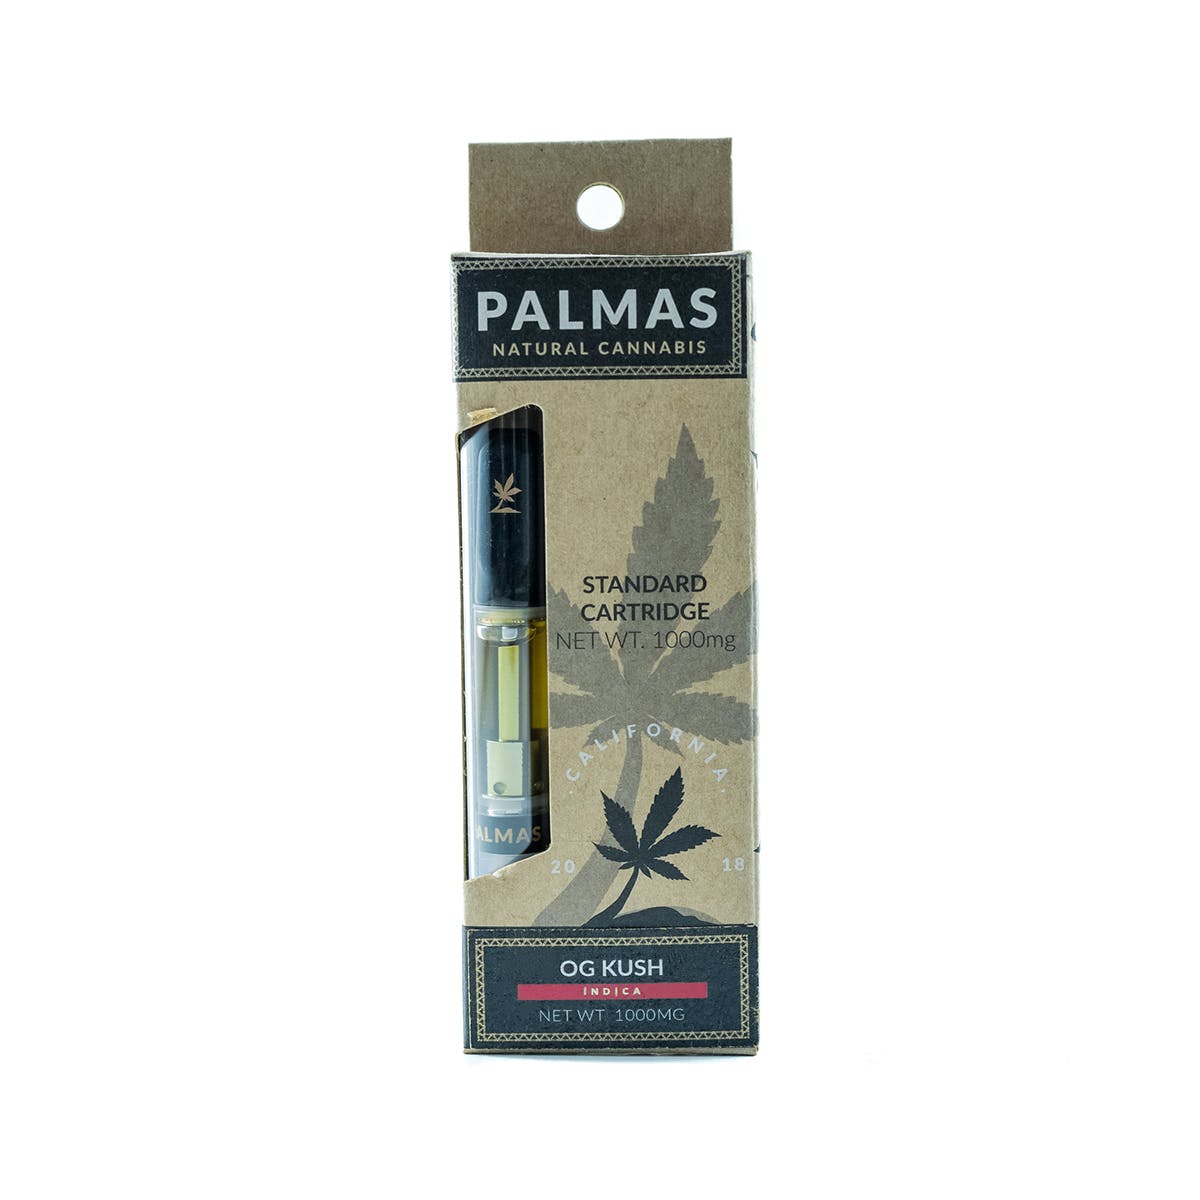 marijuana-dispensaries-firestone-20-cap-in-los-angeles-palmas-standard-cartridge-og-kush